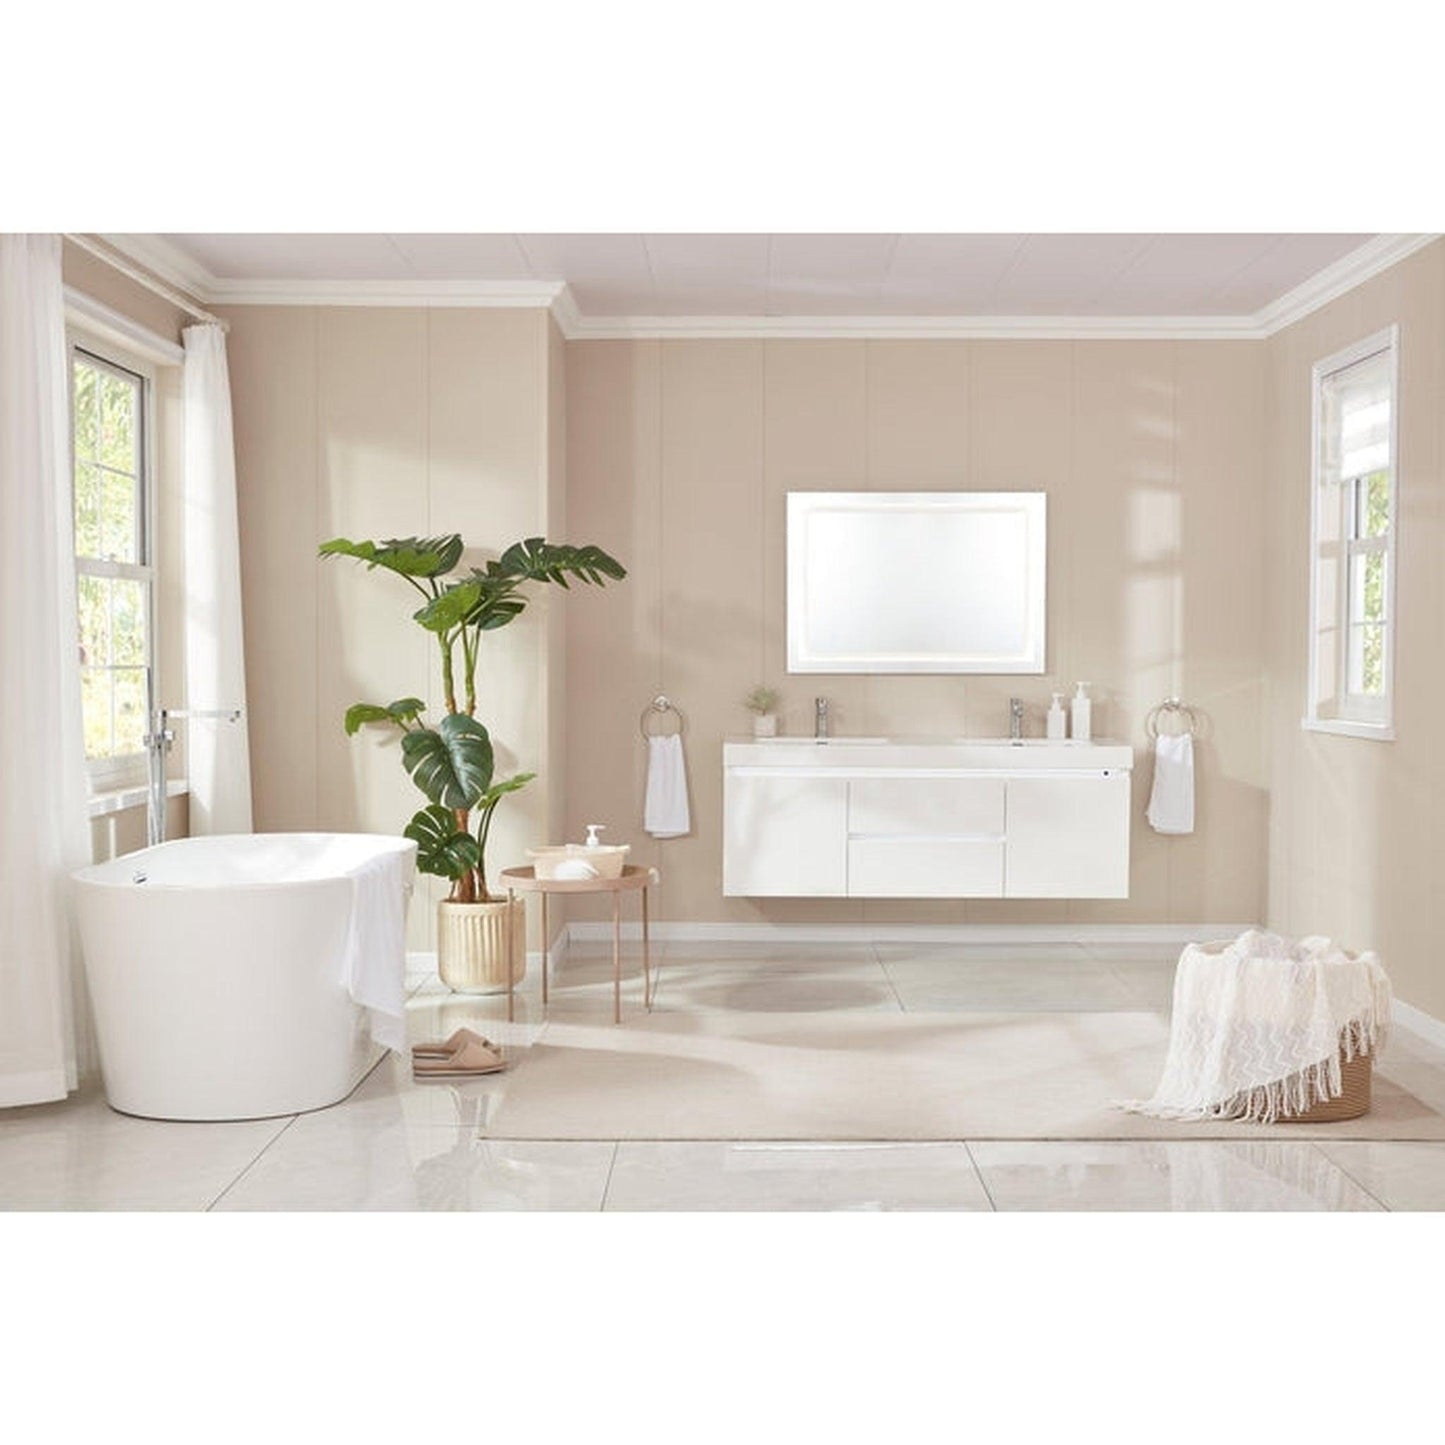 Vanity Art VA6815-S 59" Glossy White Acrylic Freestanding Soaking Tub With Overflow and Pop-up Drain